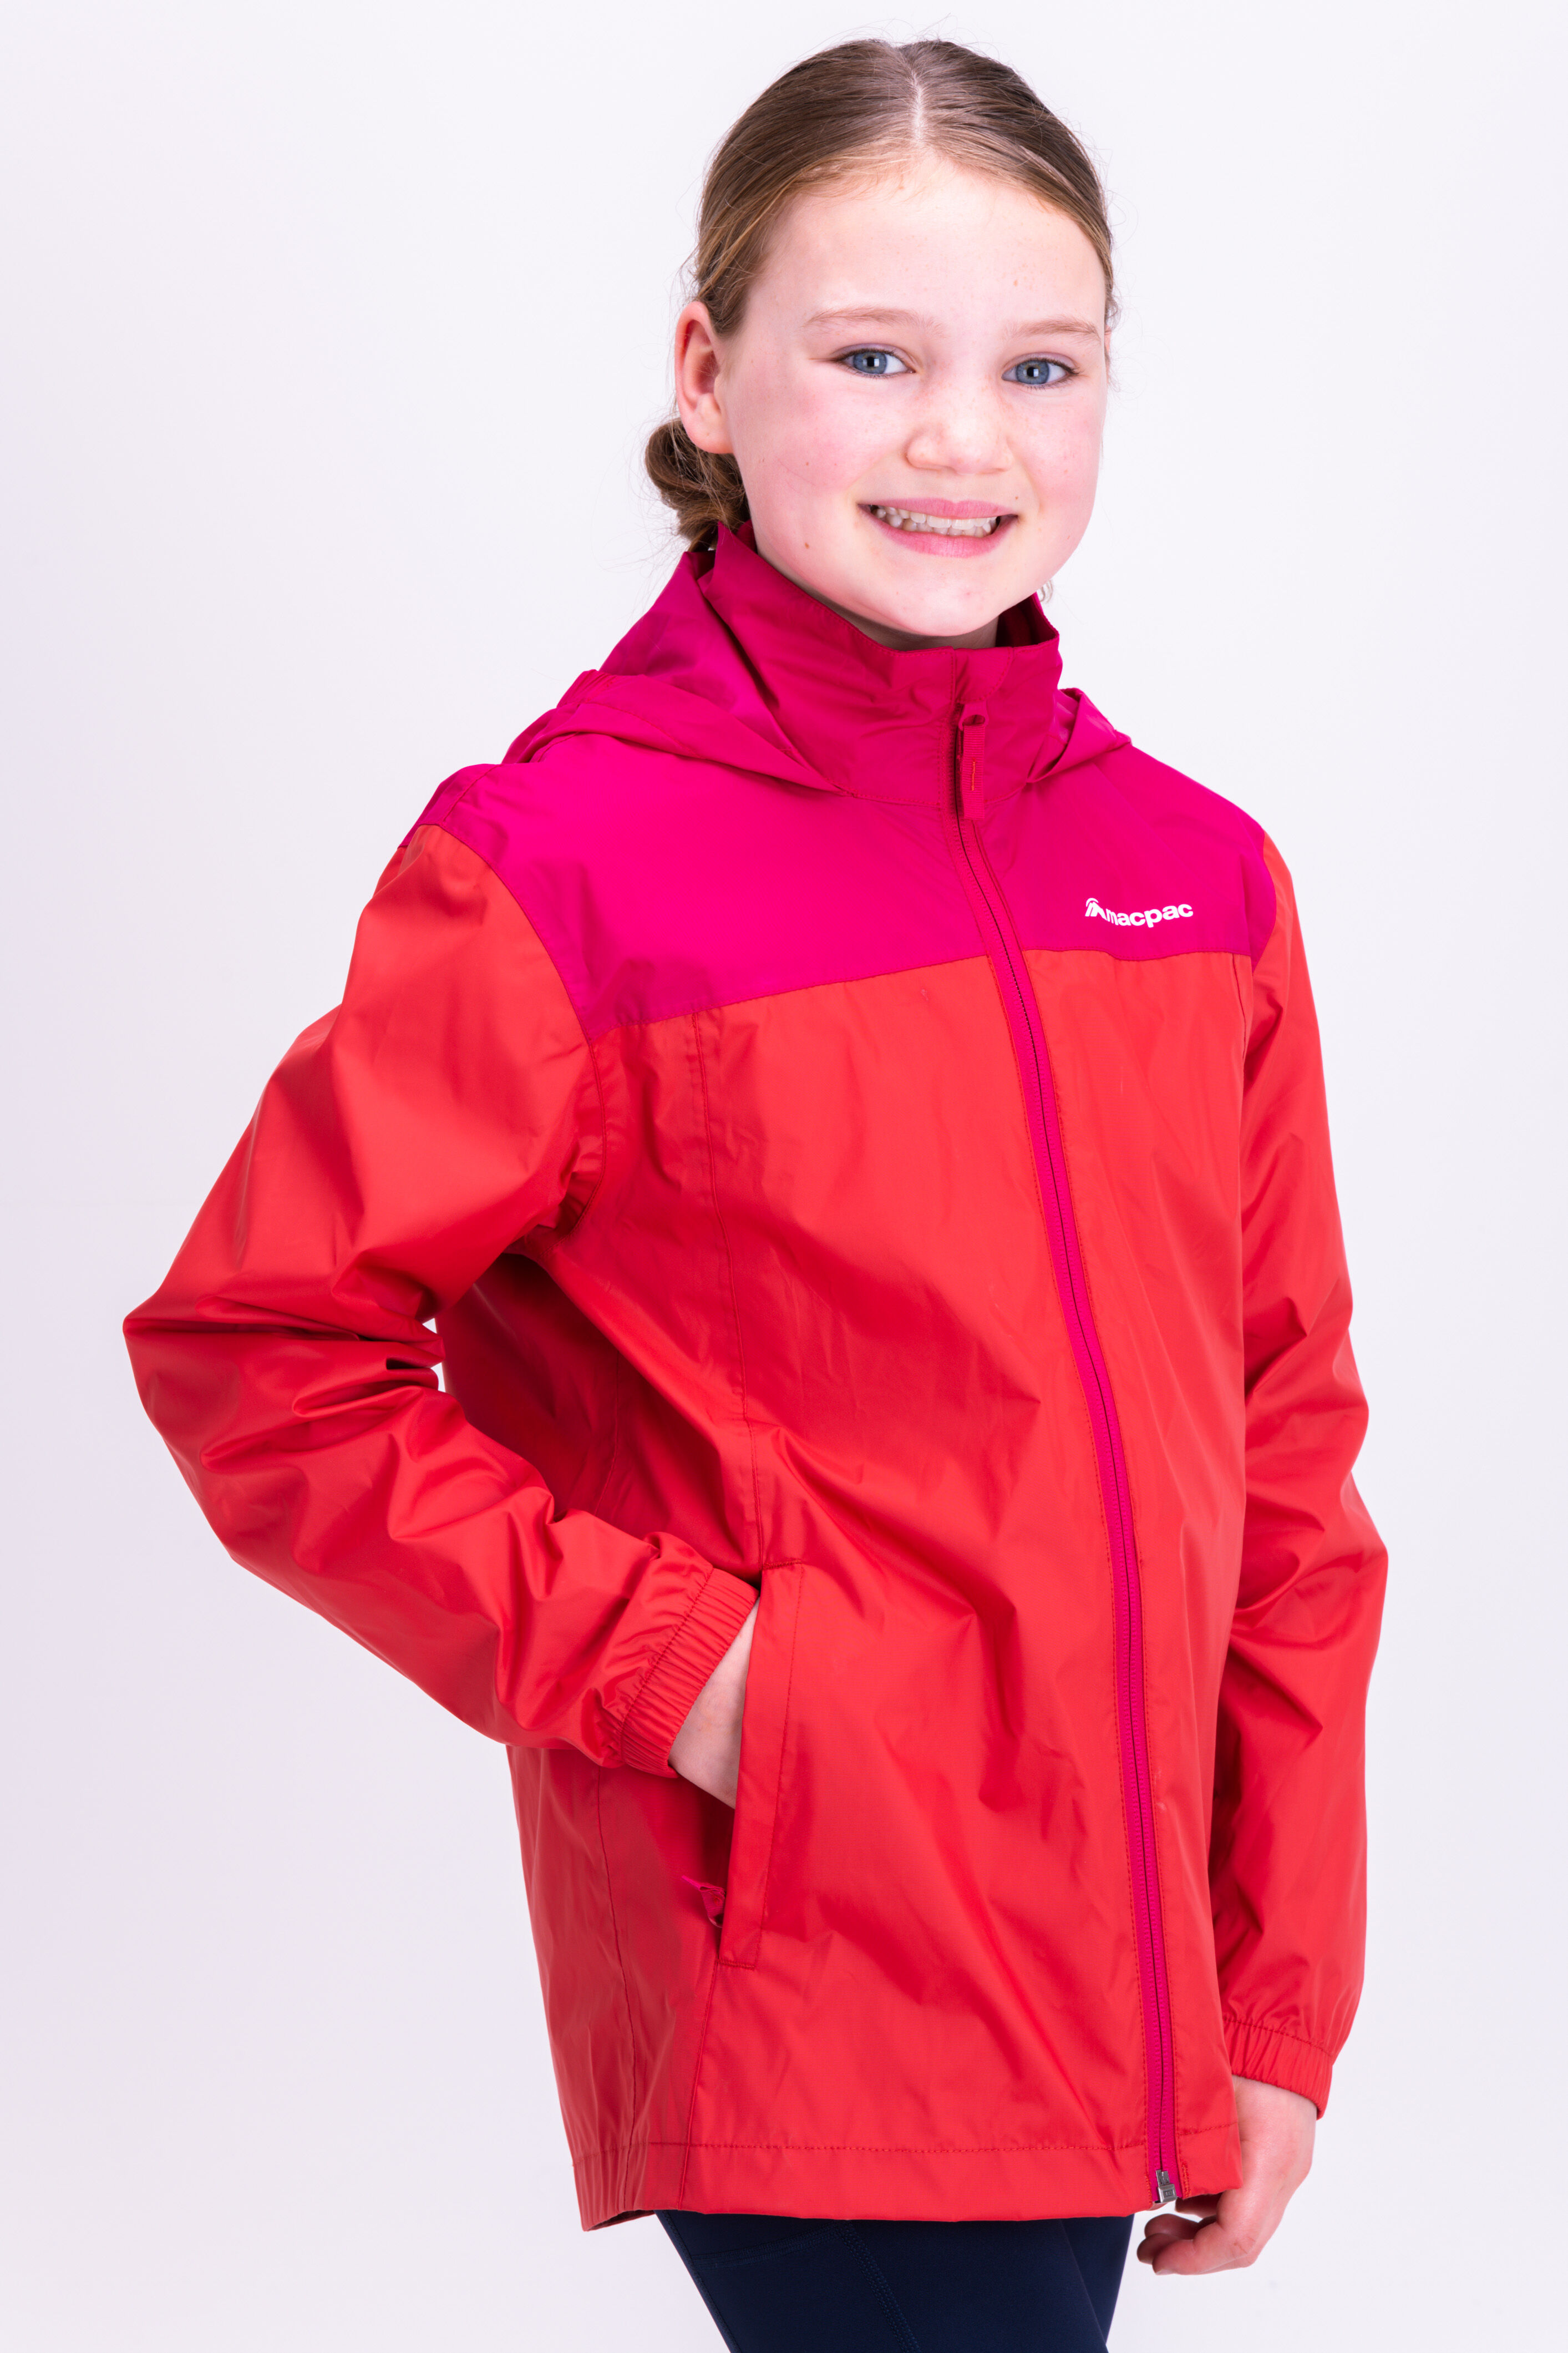 CareTec Unisex Kids Waterproof Jacket 